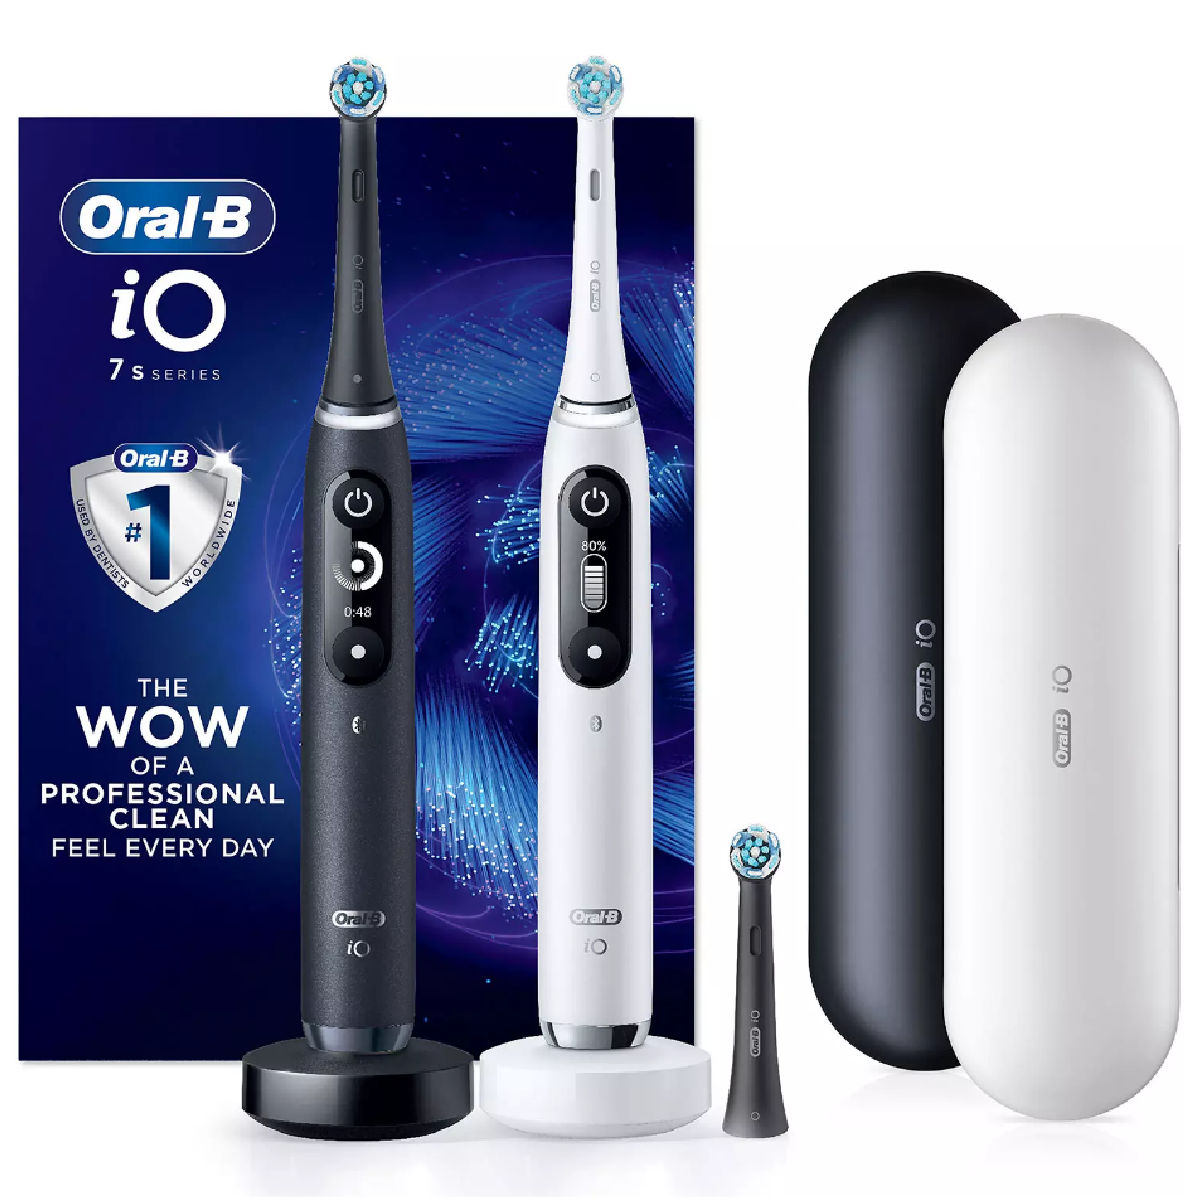 buy-oral-b-teen-electric-toothbrush-black-australia